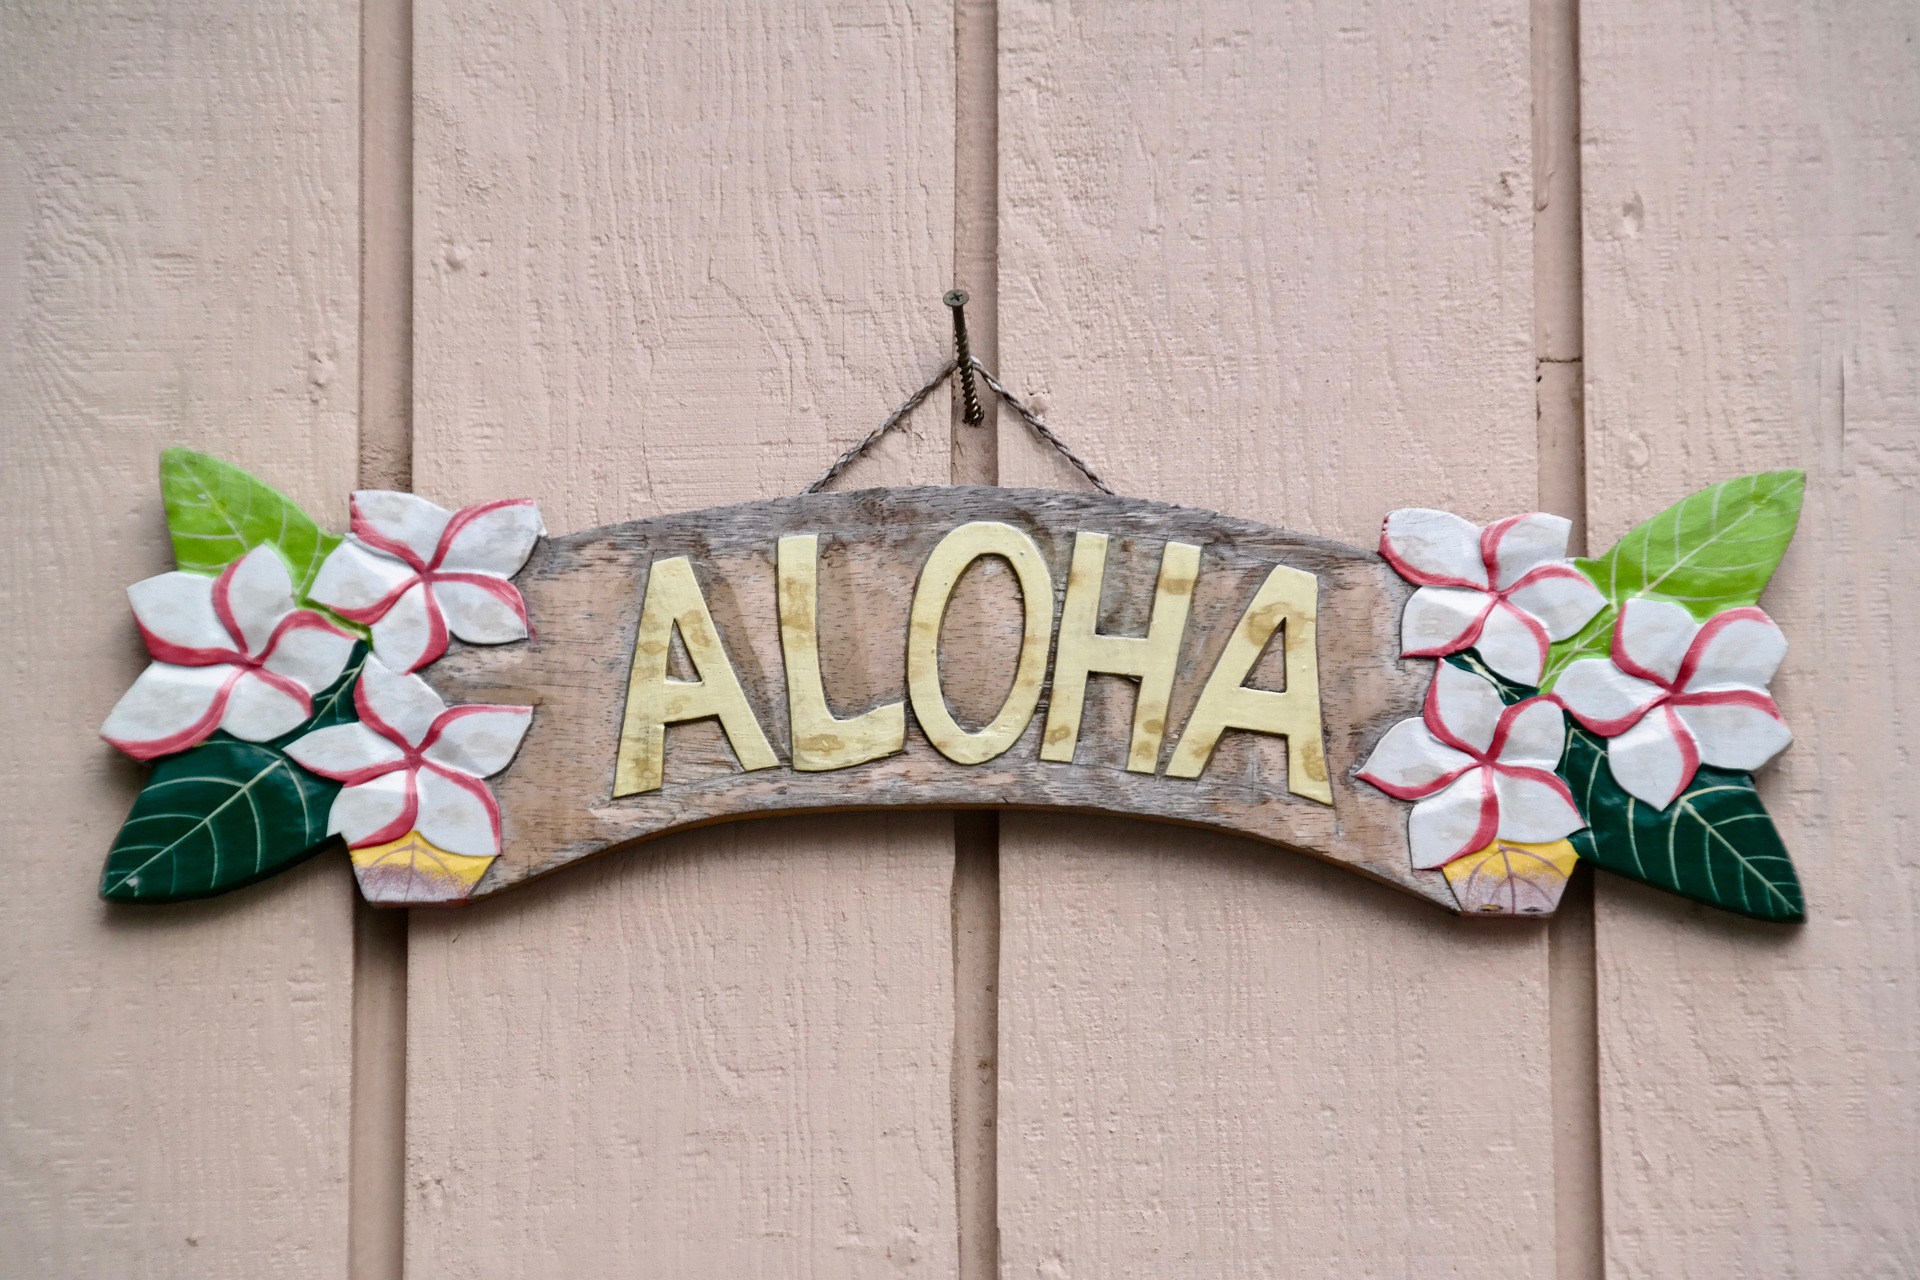 Alloha welcomes you что это. АЛОХА Гавайи. Гавайцы АЛОХА. АЛОХА картинки. Обои АЛОХА Гавайи.